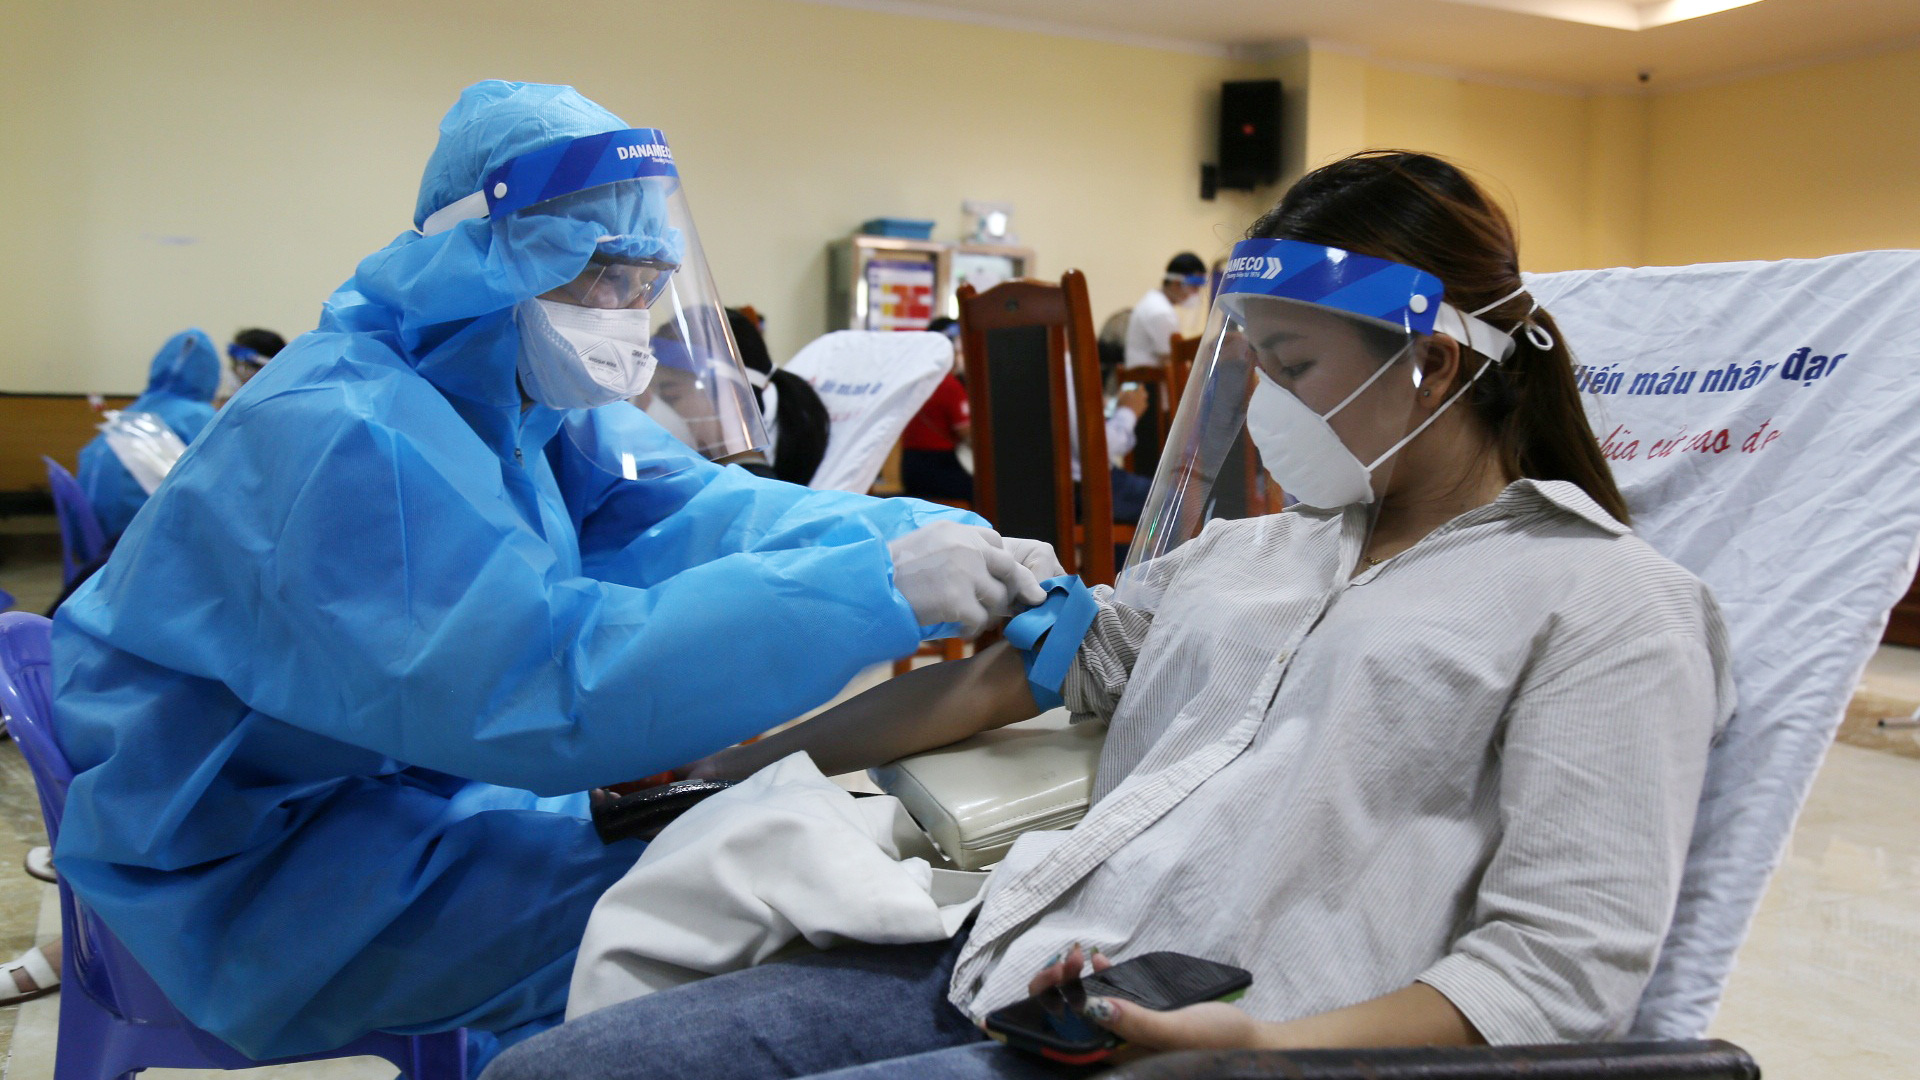 Blood donation spirit endures during COVID-19 pandemic in Vietnam